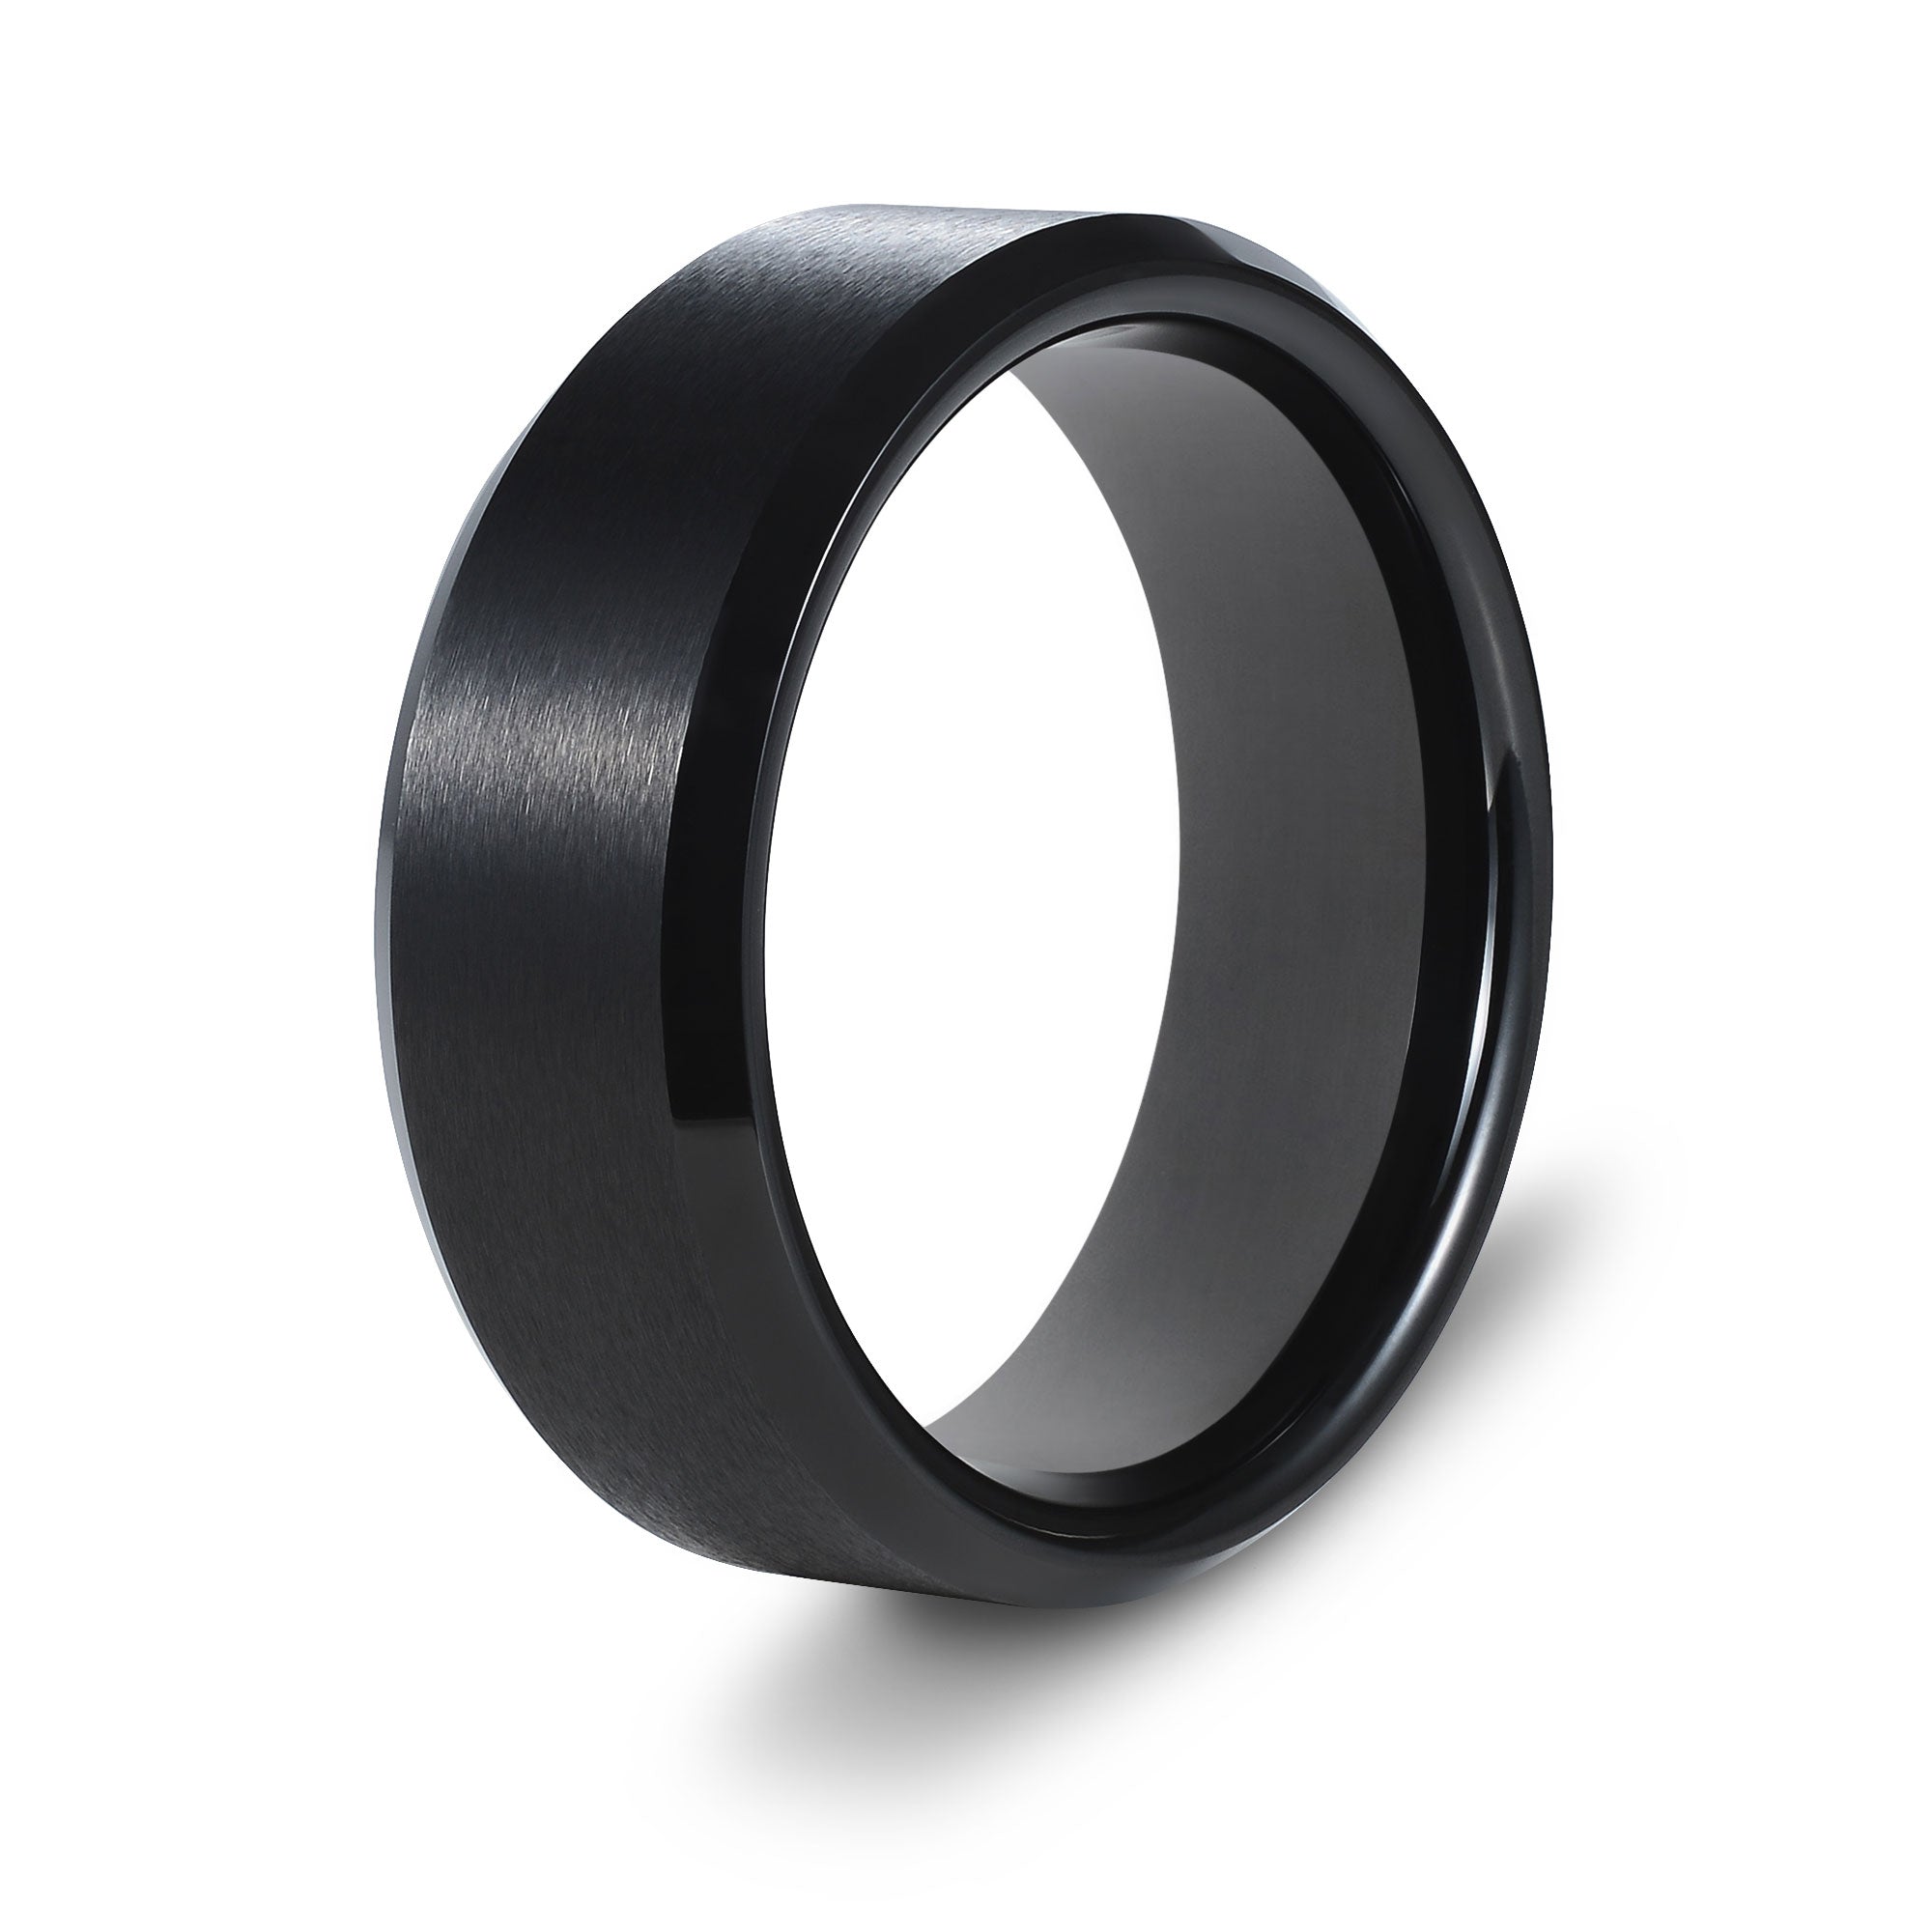 The Darknight - Black 8mm Brushed Tungsten Beveled Ring